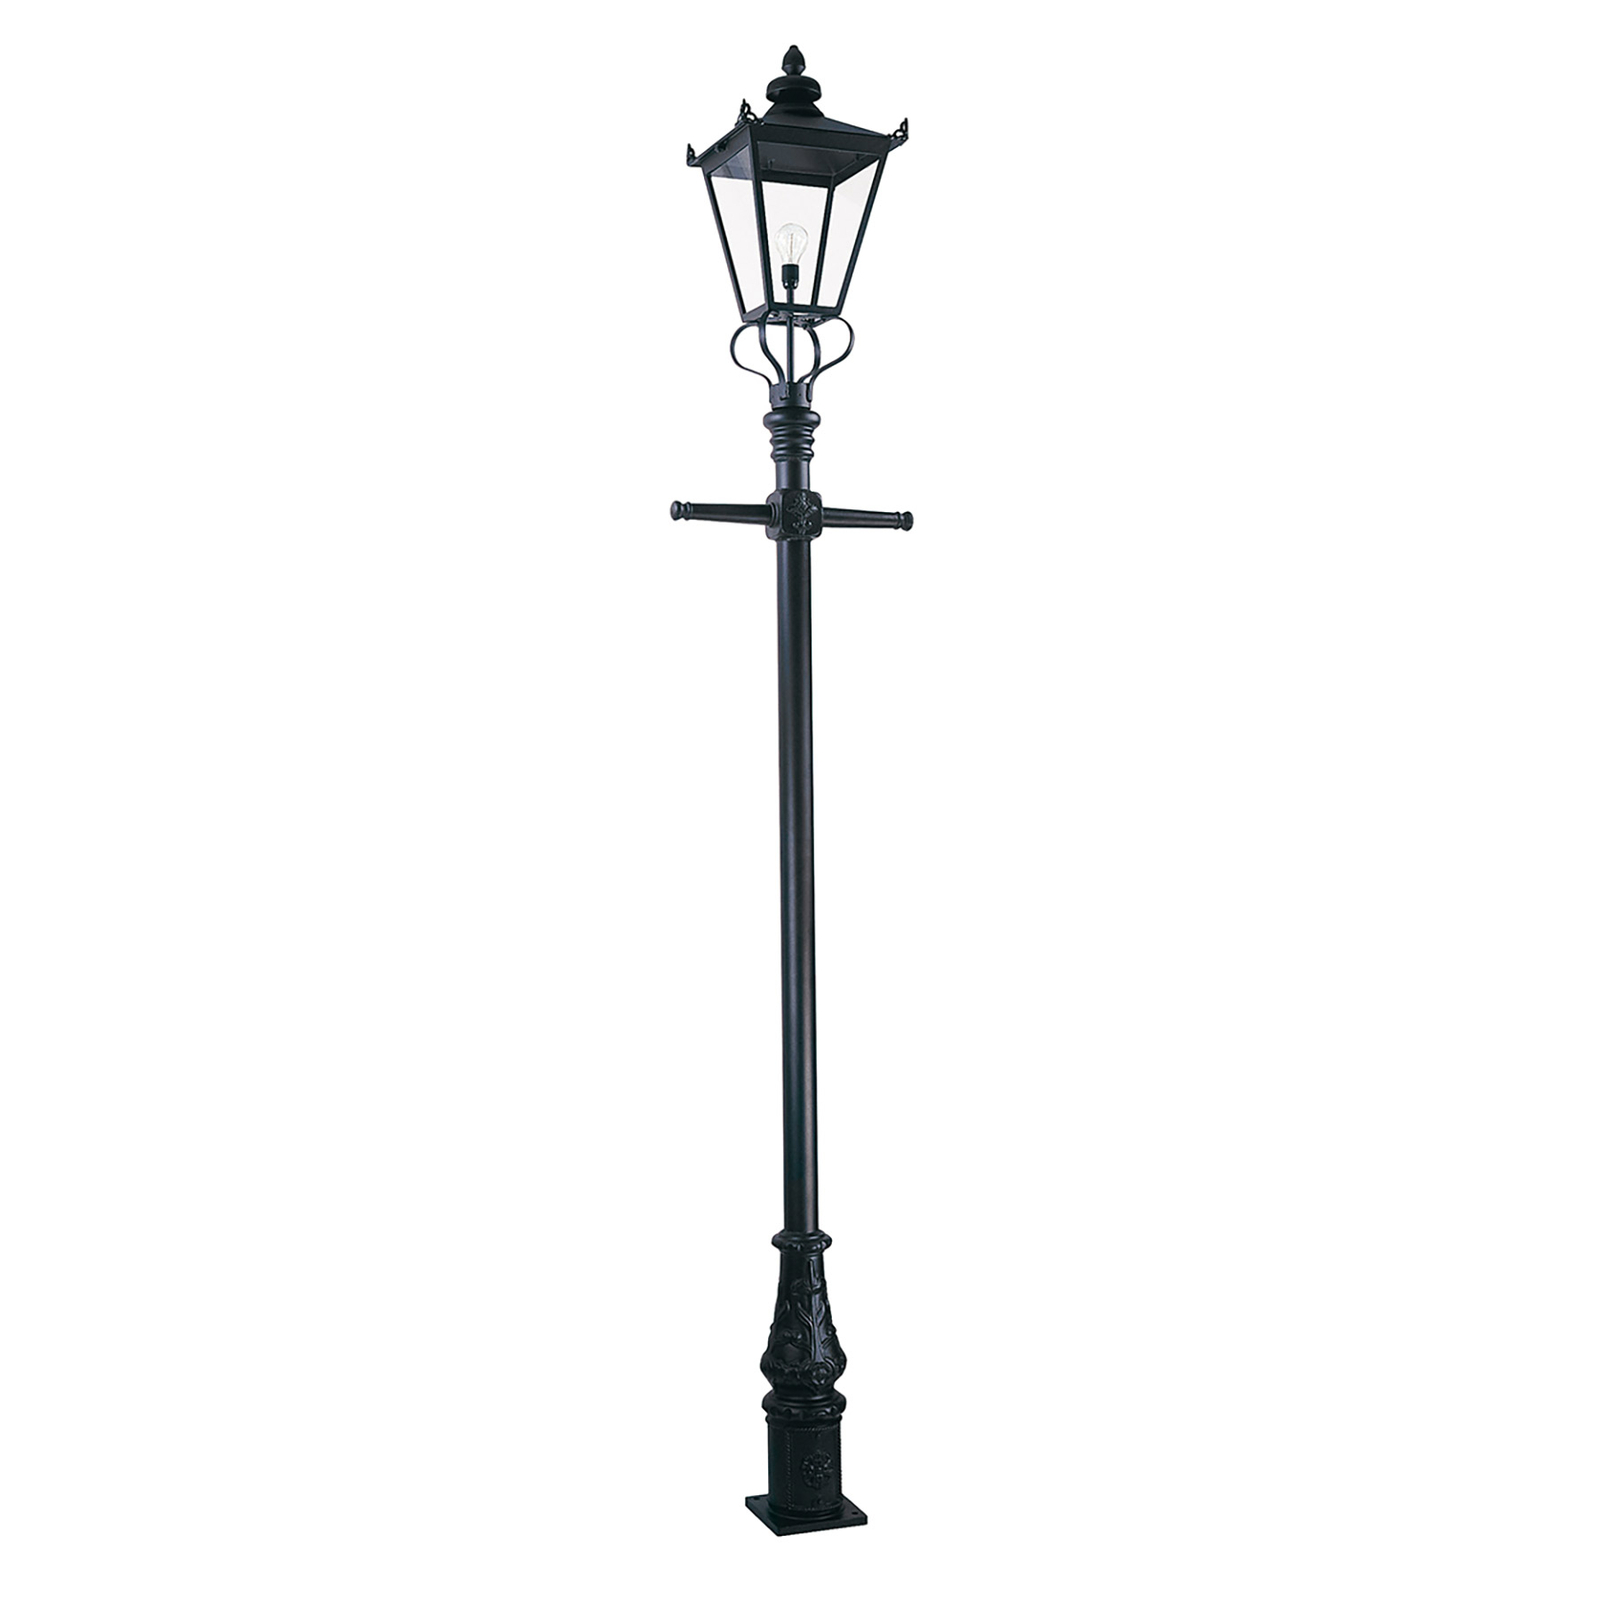 Kandelaber Wilmslow svart 1 lampa höjd 330 cm